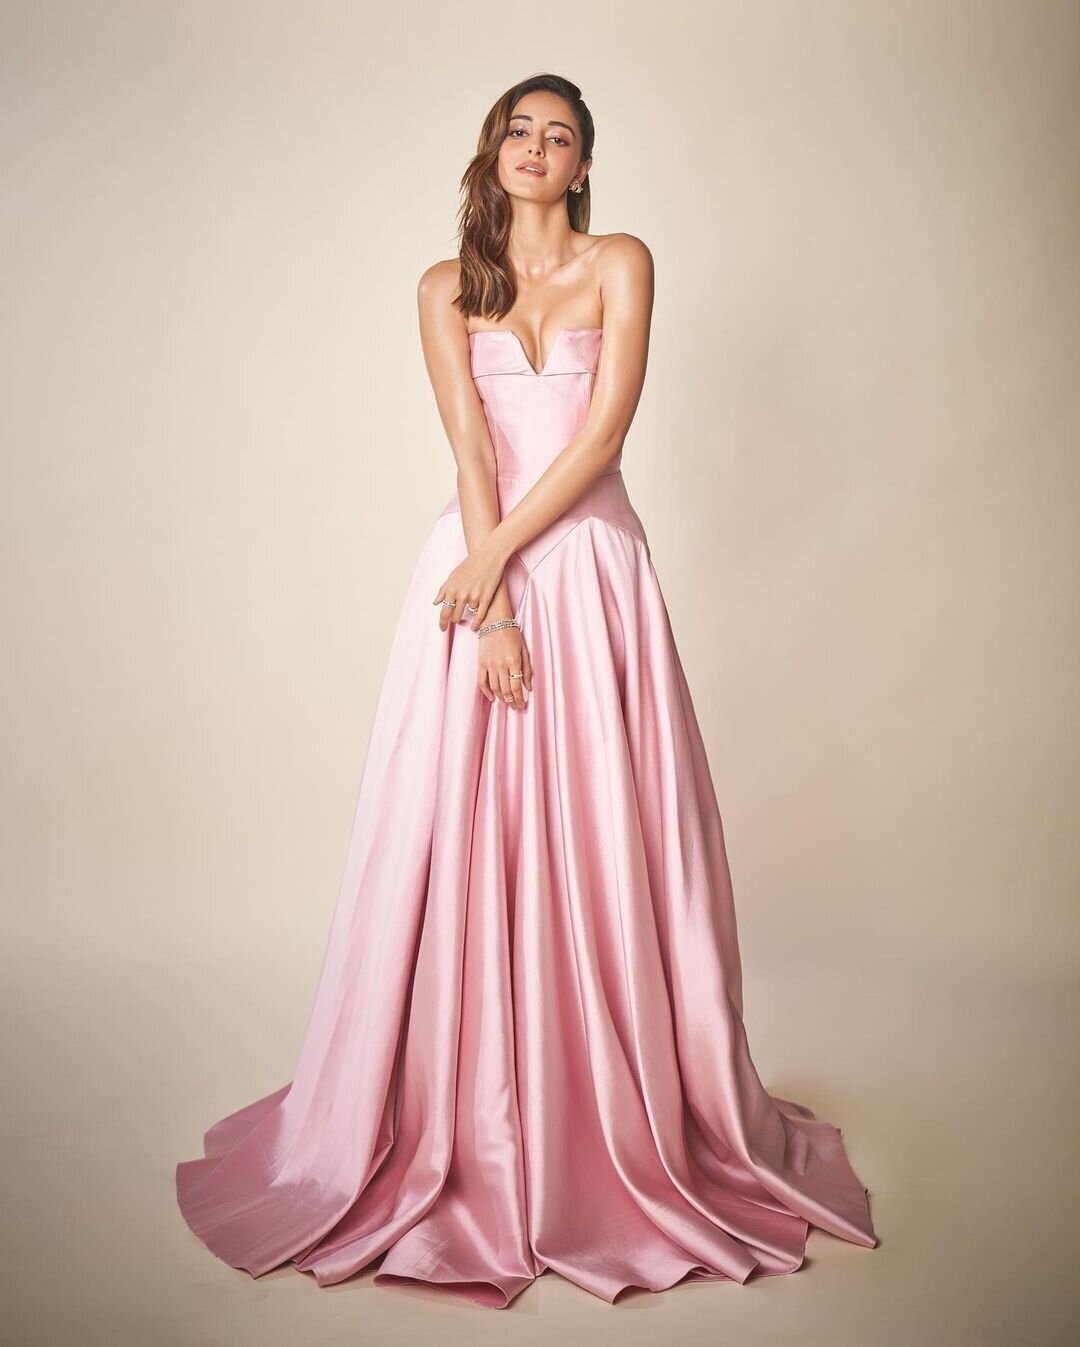 Ananya Panday Photos In Pink Dress